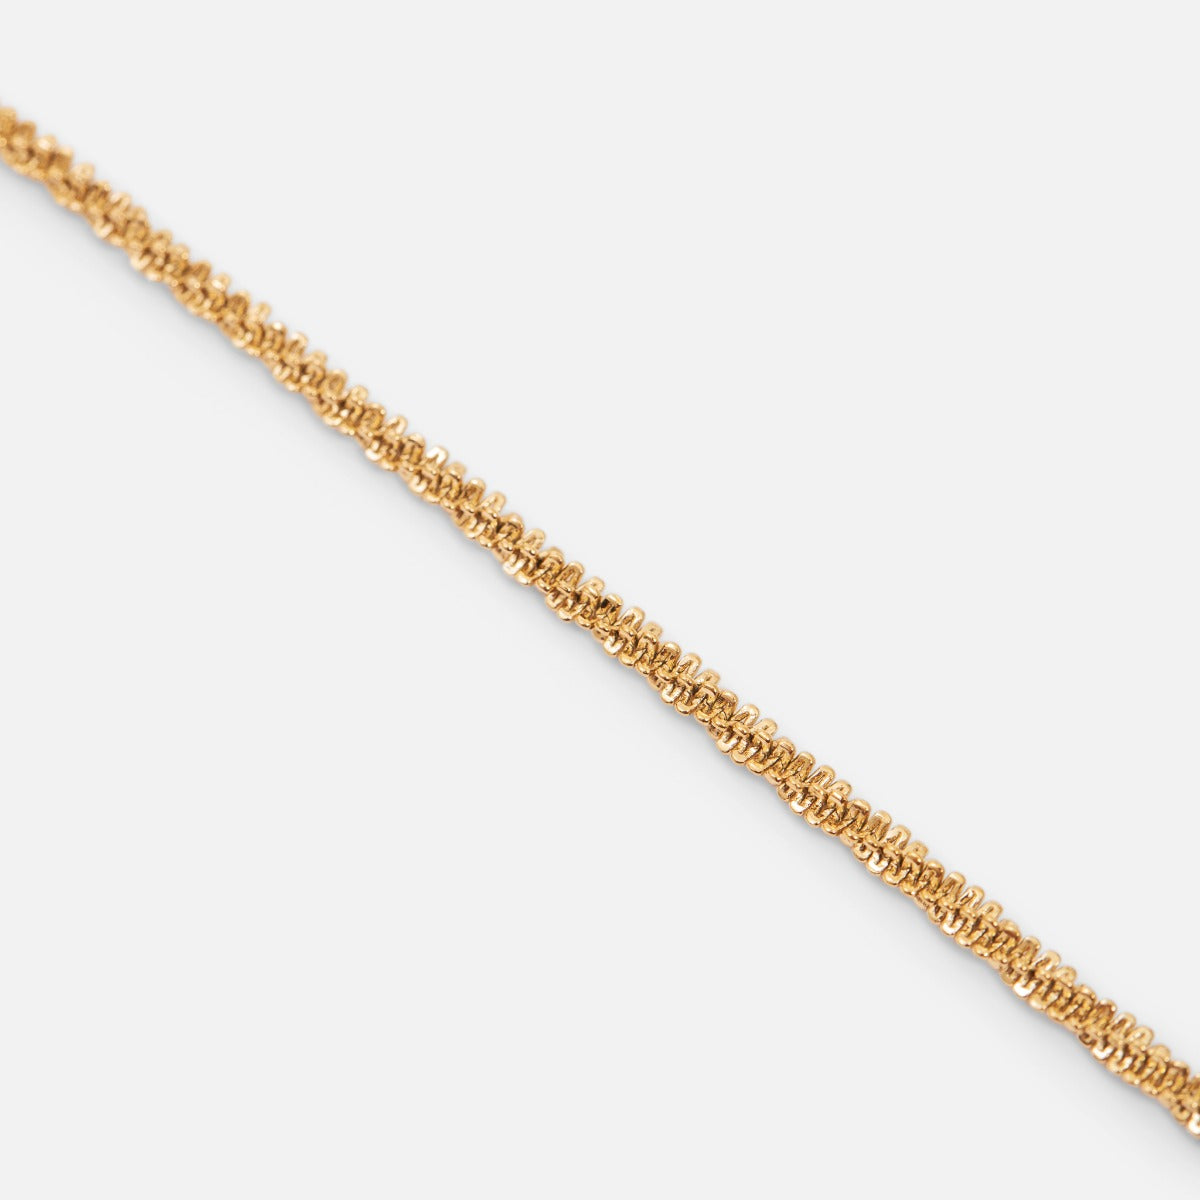 Adjustable golden bracelet in stainless steel